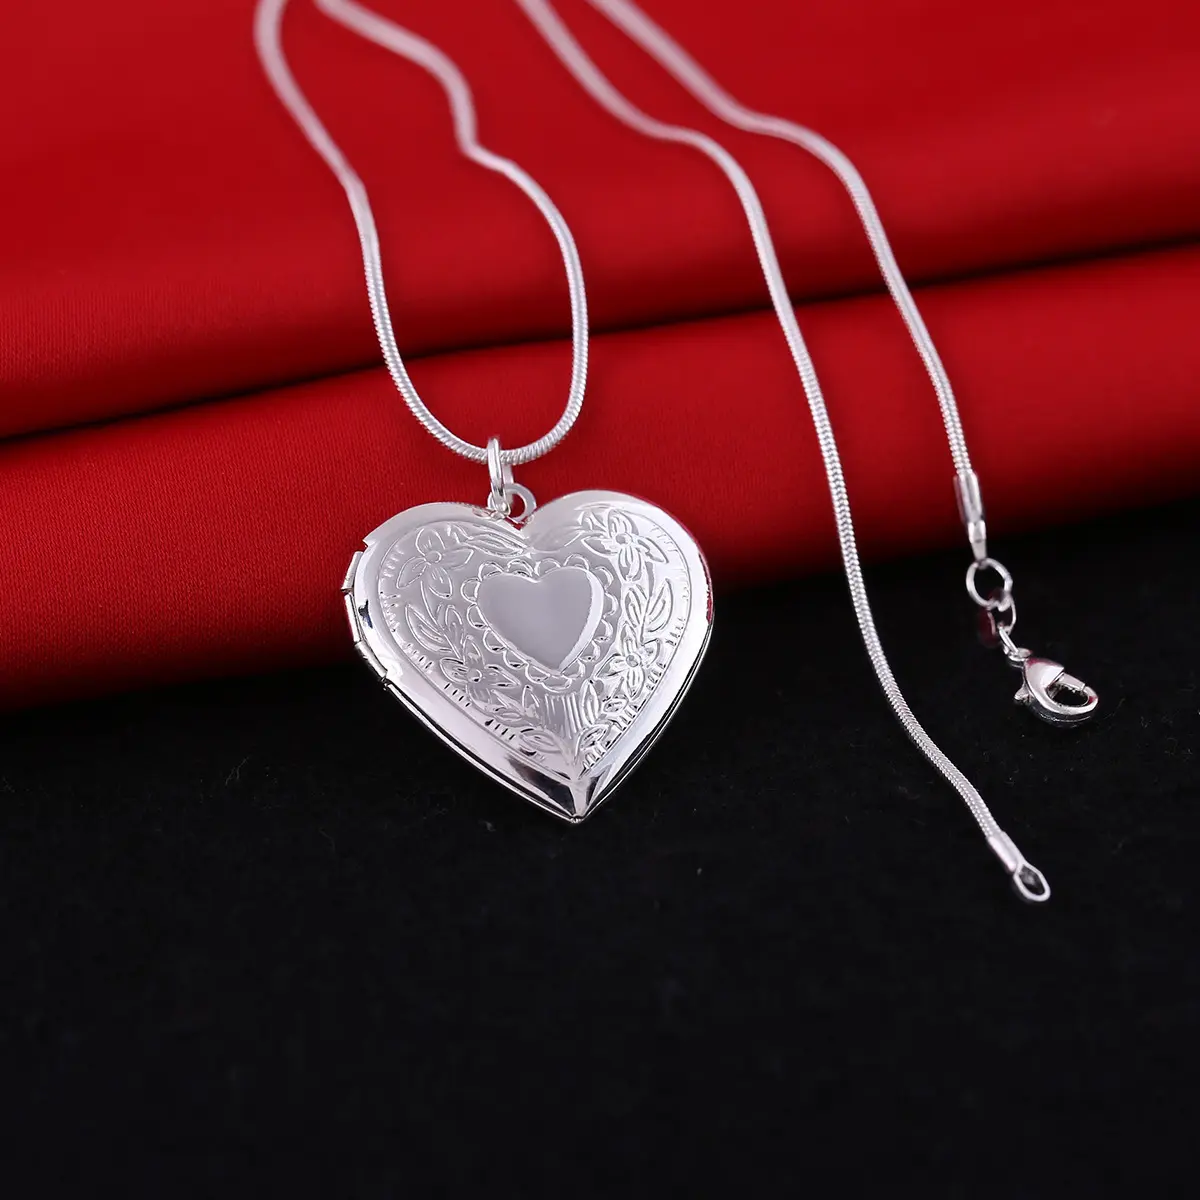 Fashion 925 Silver plated Romantic Stylish Lady Jewelry Gothic Choker Collar Women Open Heart Photo Frame Pendant Necklace